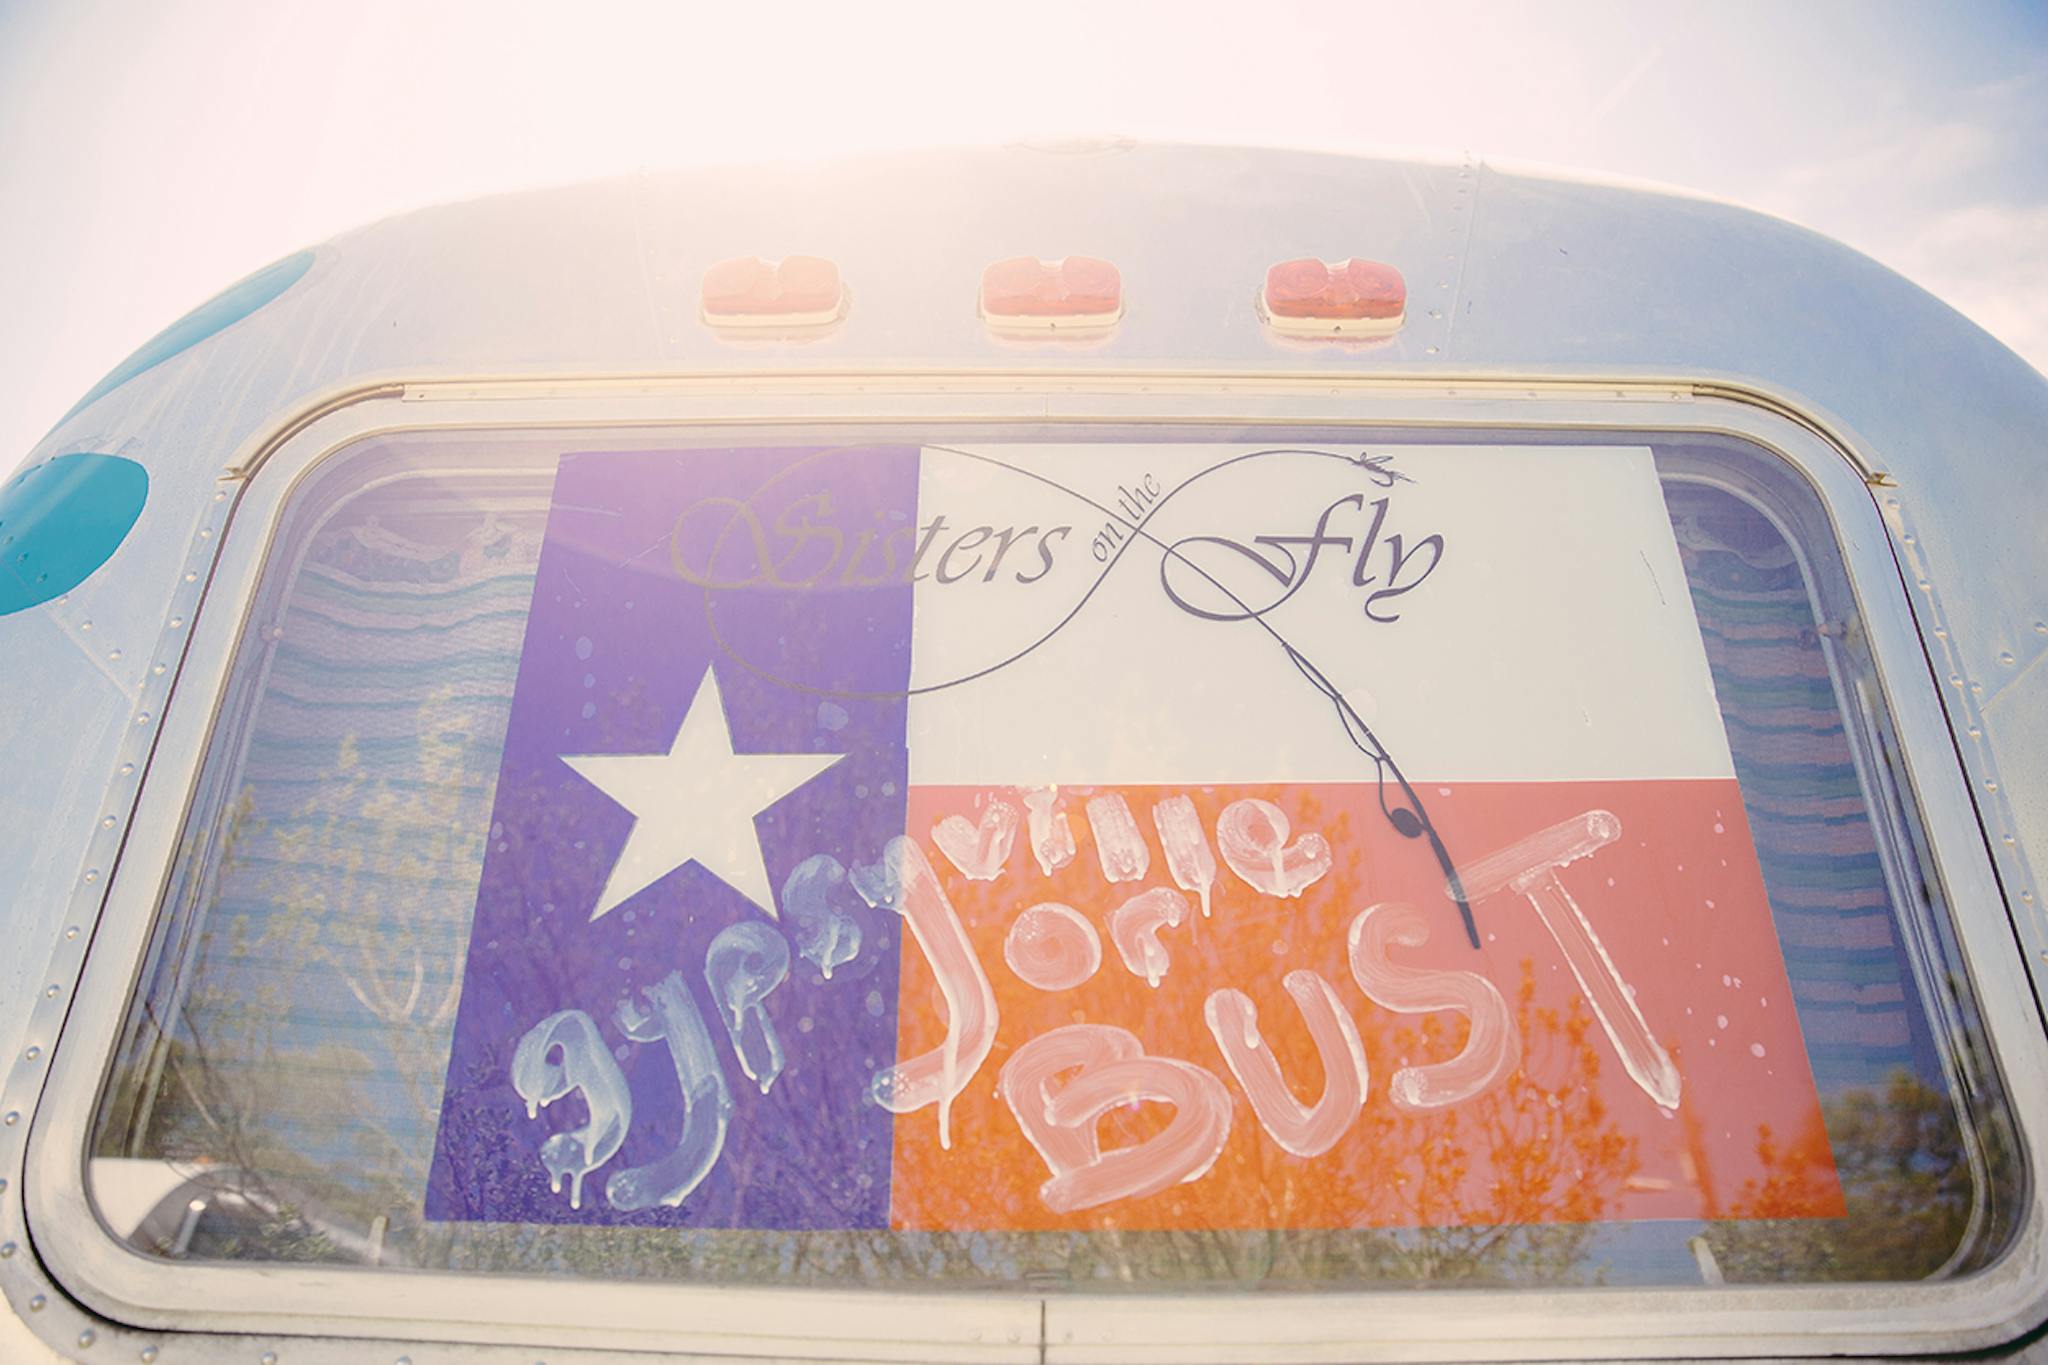 Texas flag that says Gypsyville or bust.